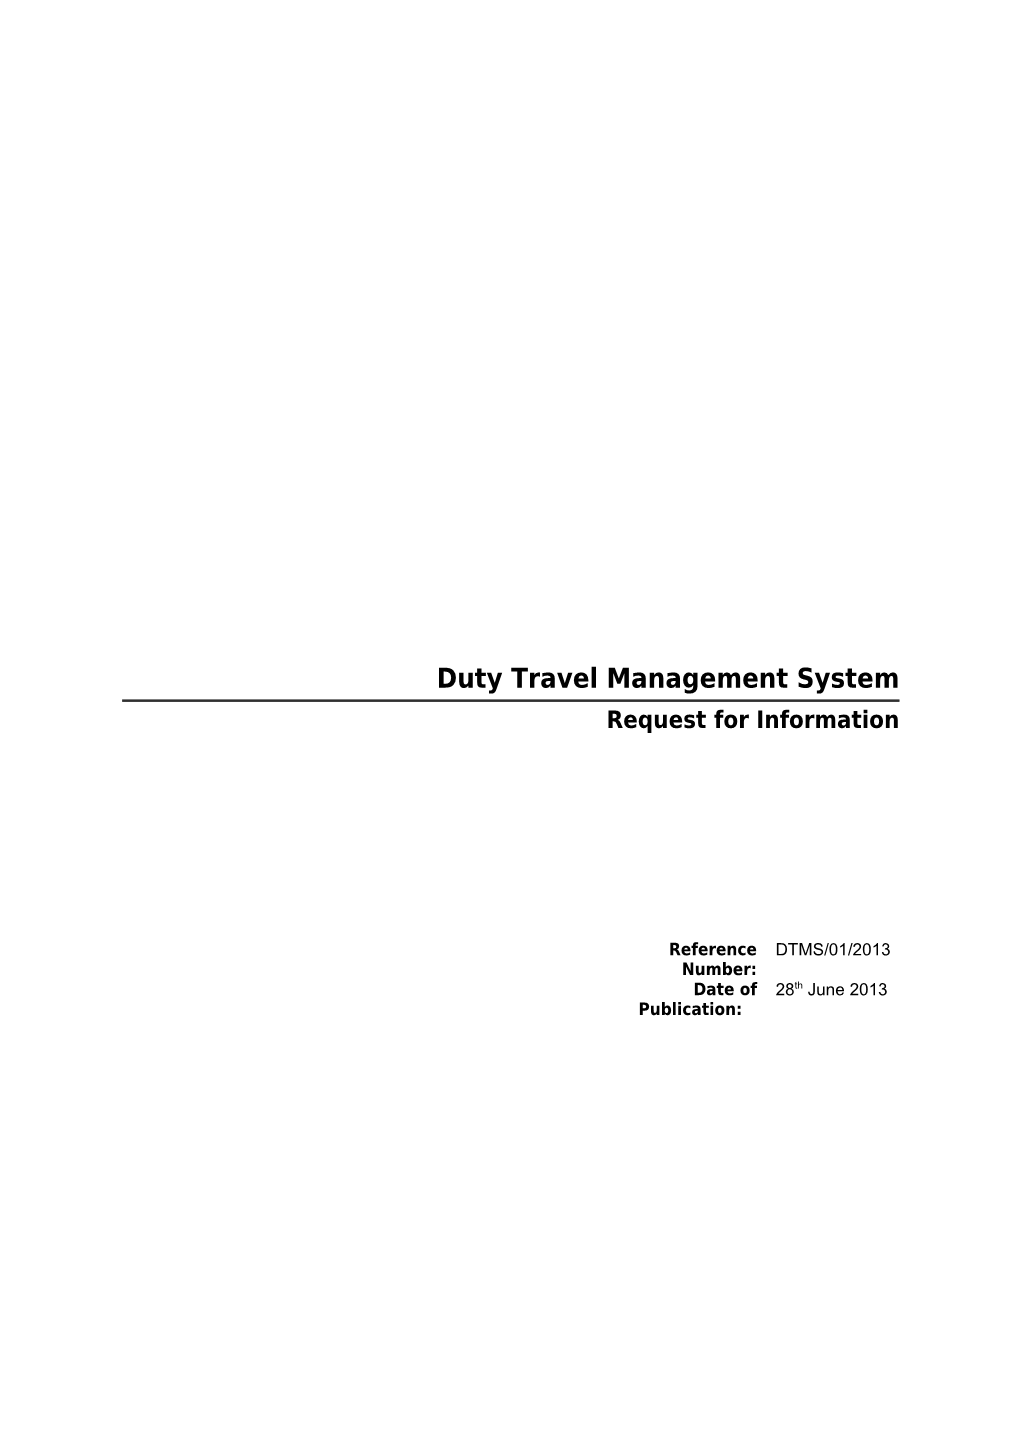 RFI - Duty Travel Management System